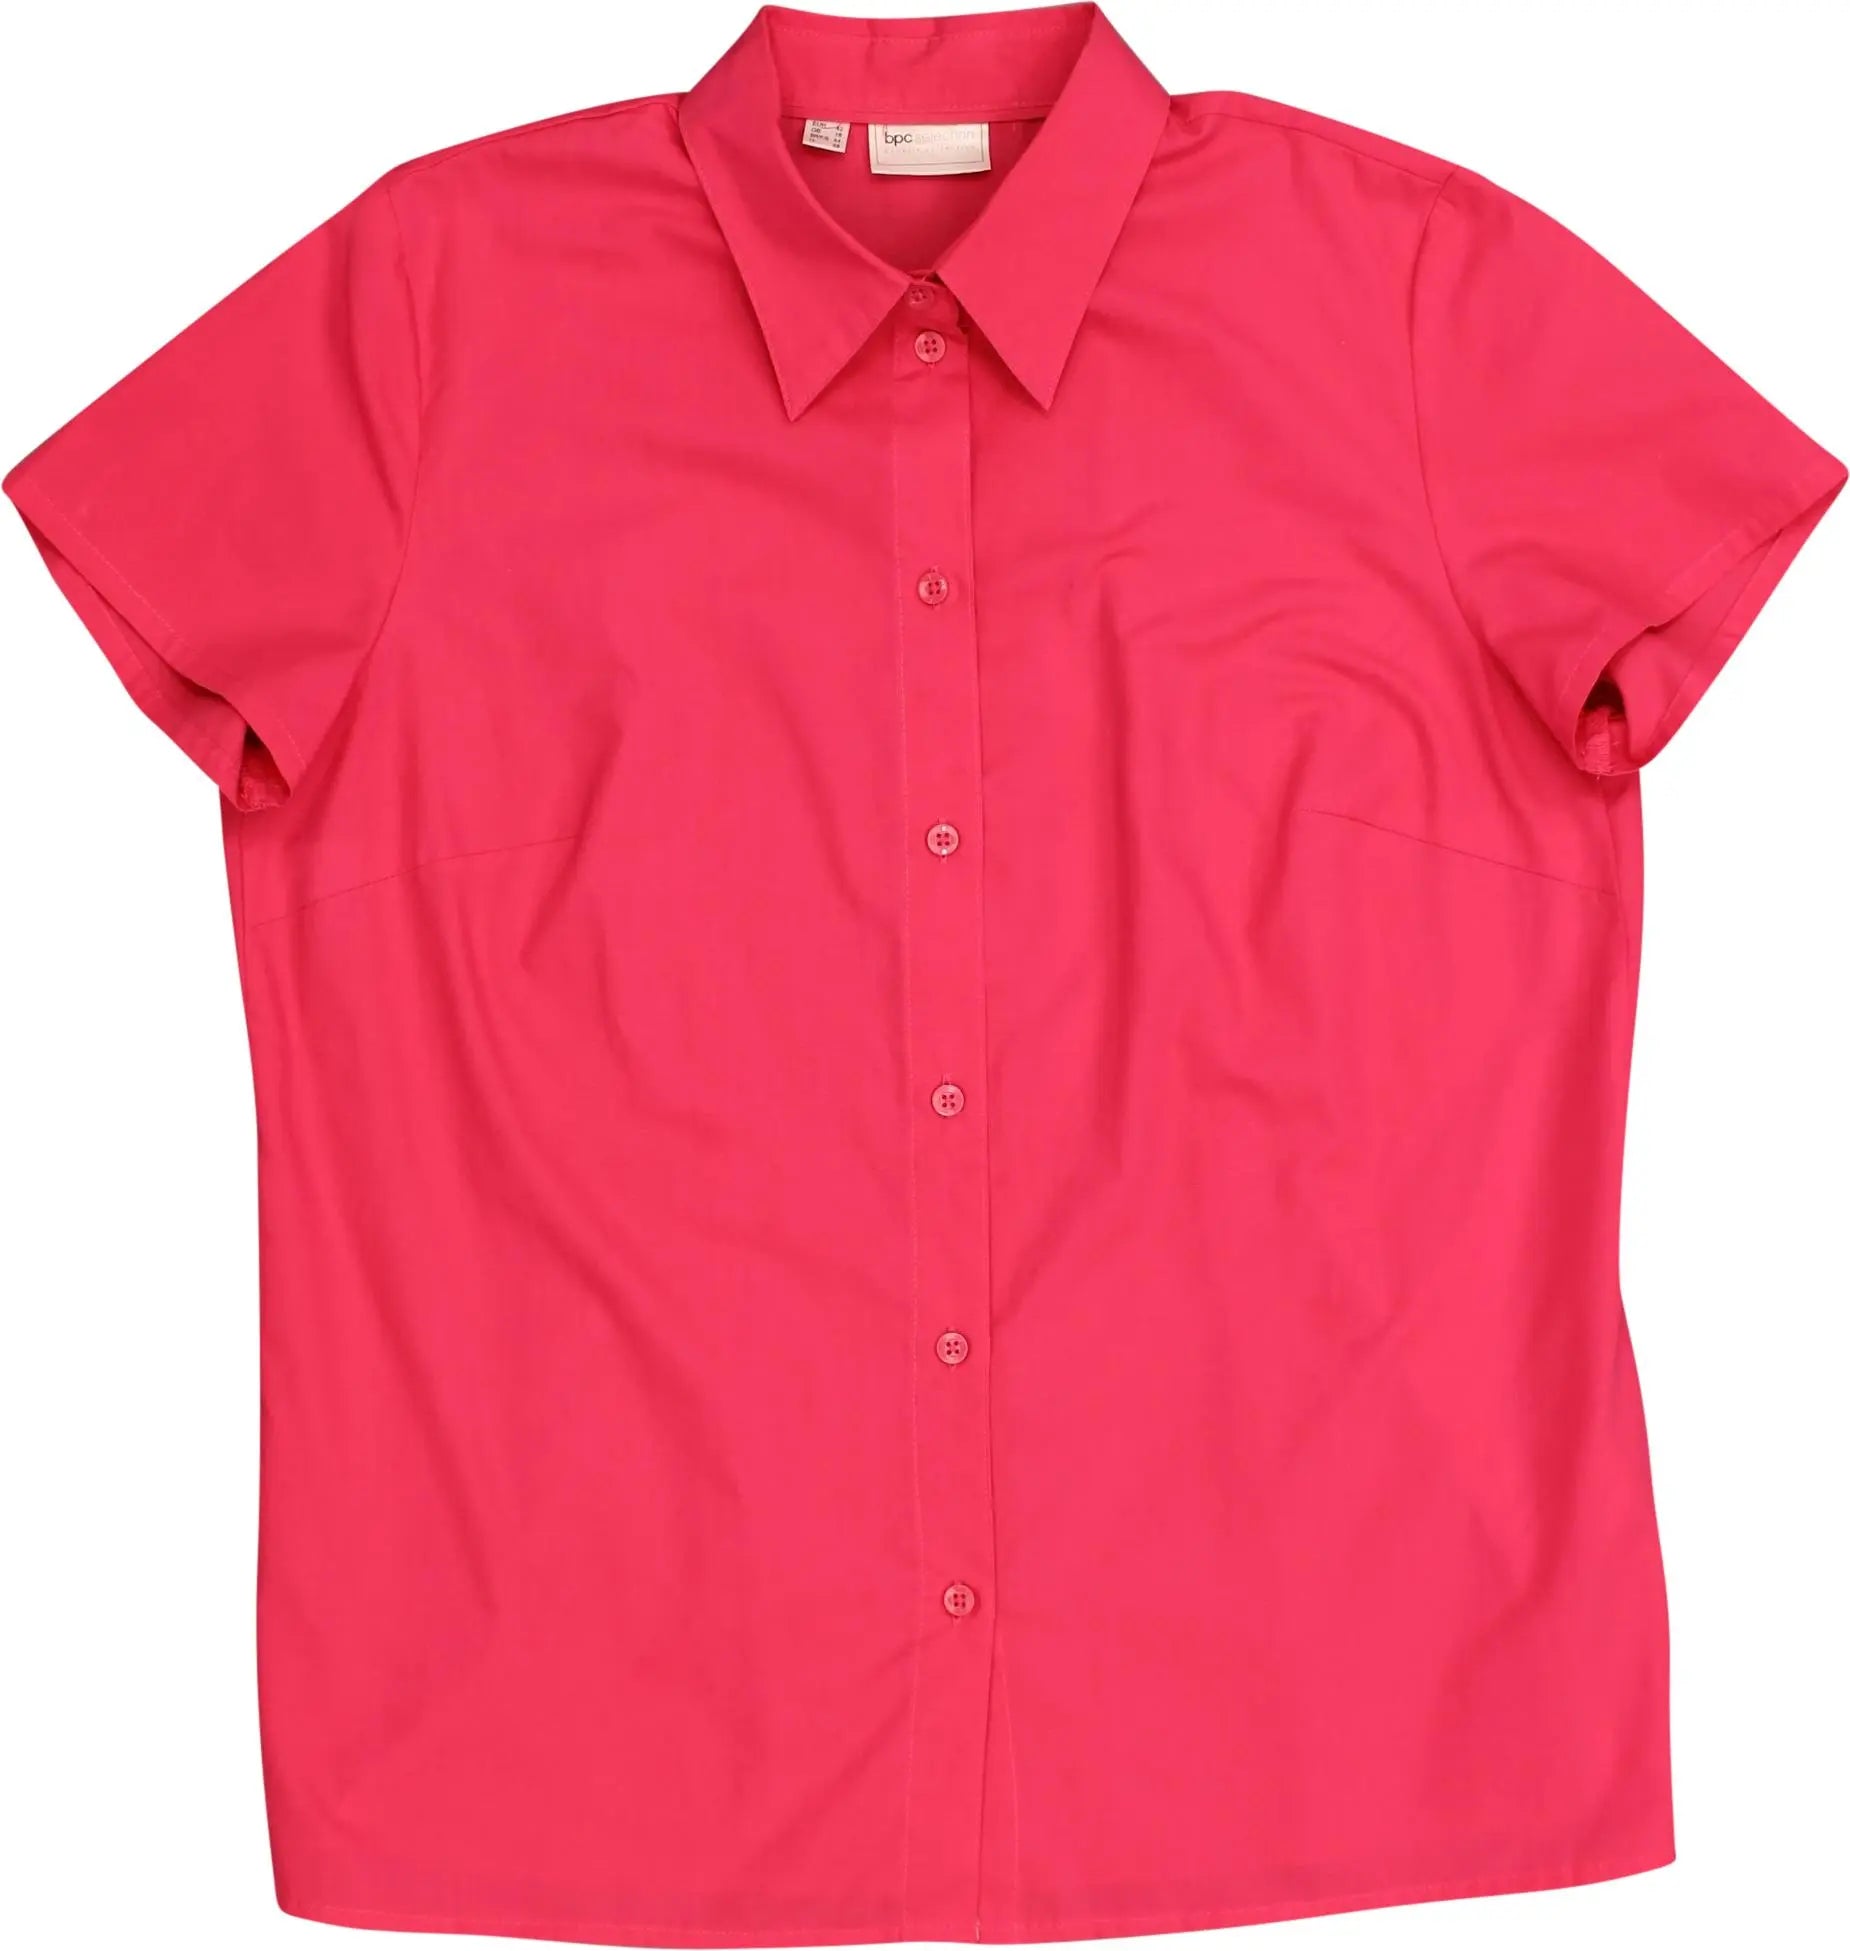 Bonprix - Pink Blouse- ThriftTale.com - Vintage and second handclothing